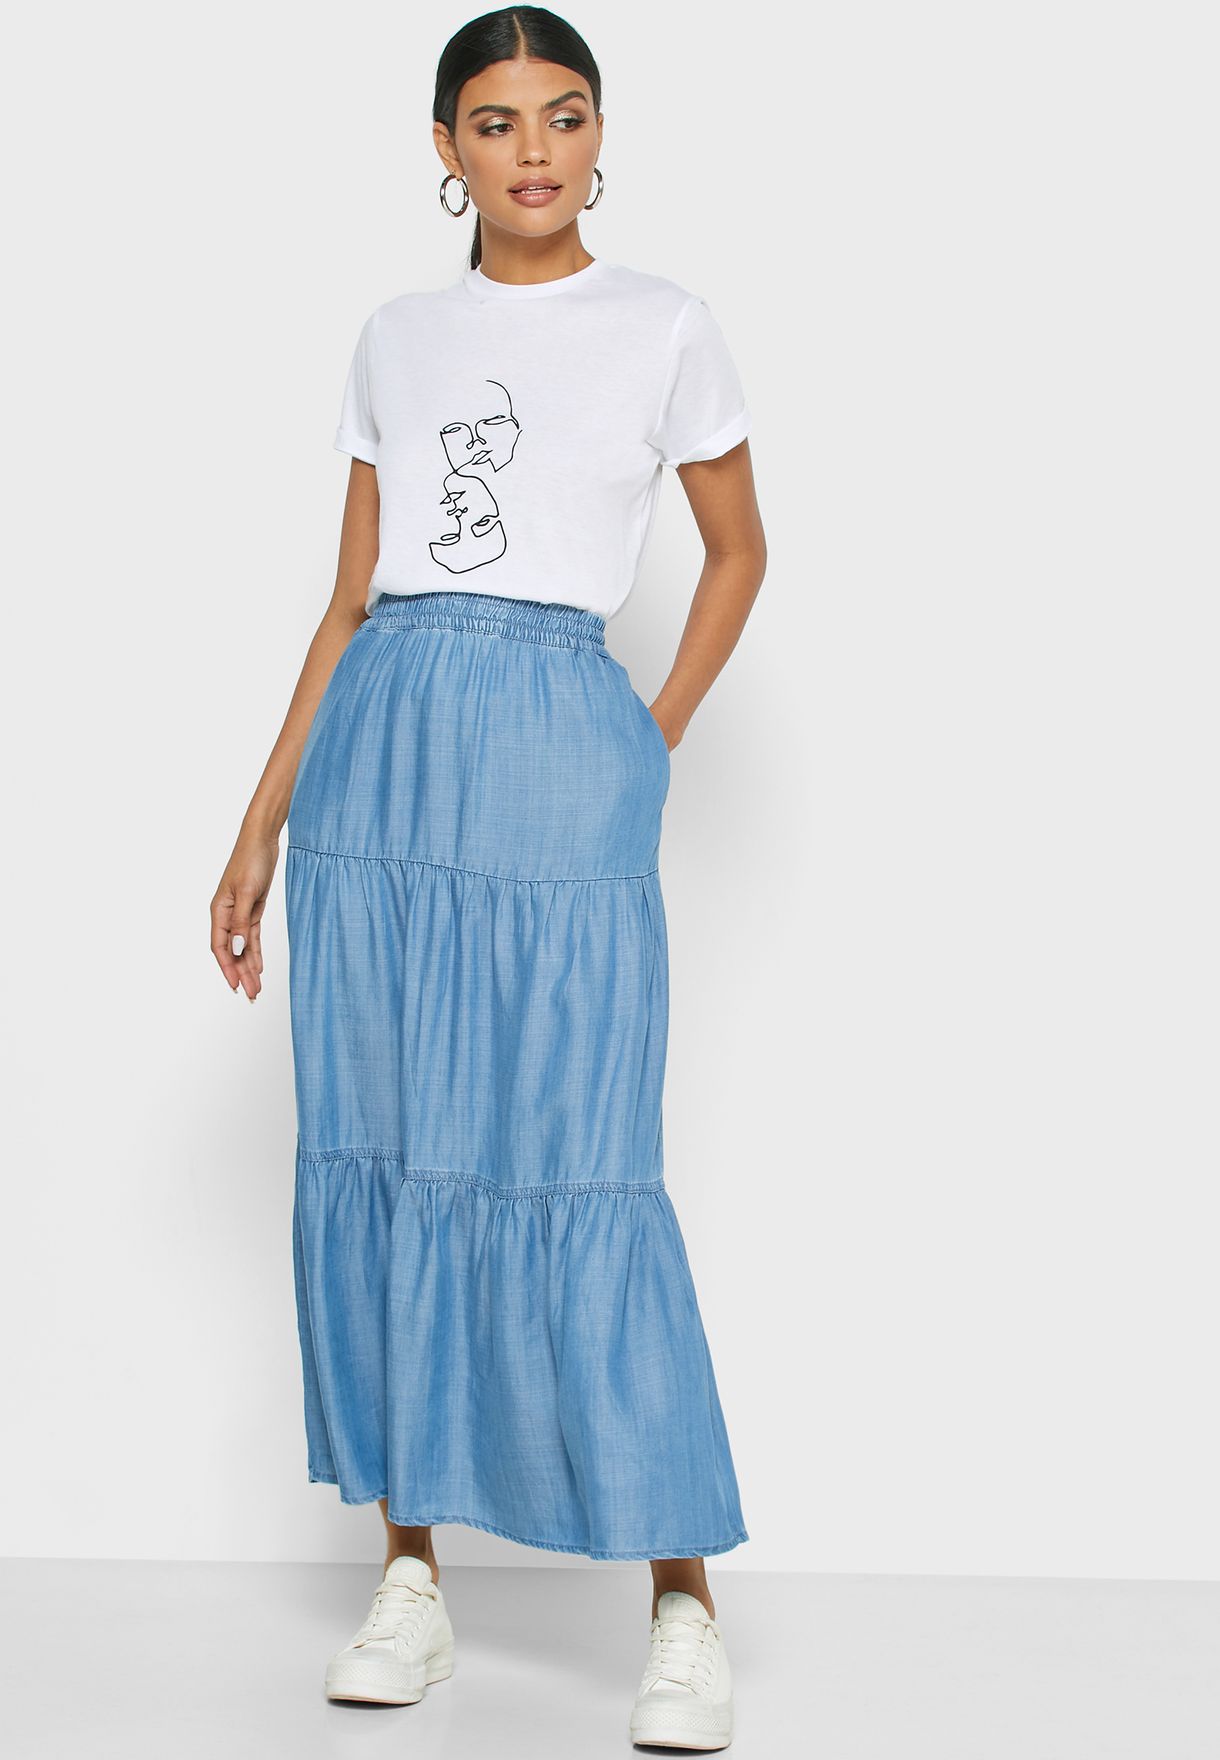 layered jean skirt